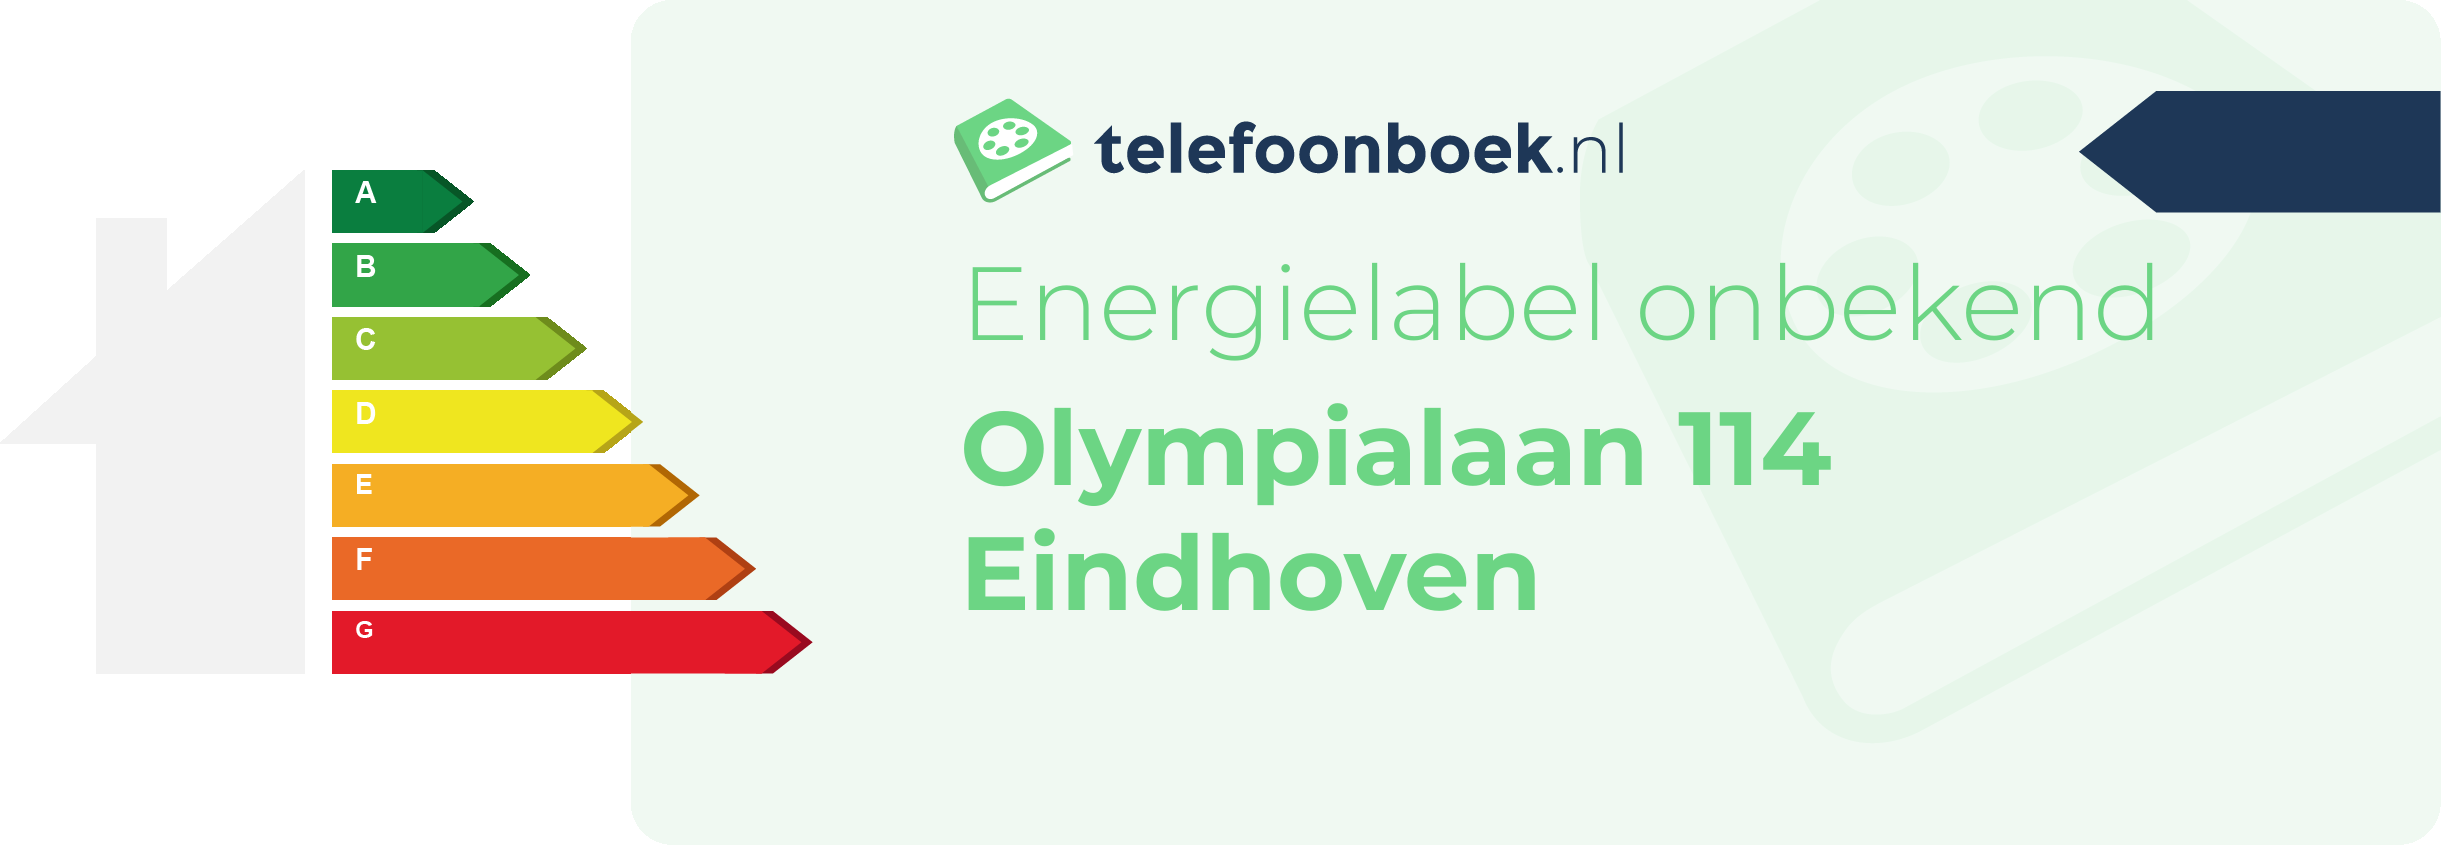 Energielabel Olympialaan 114 Eindhoven